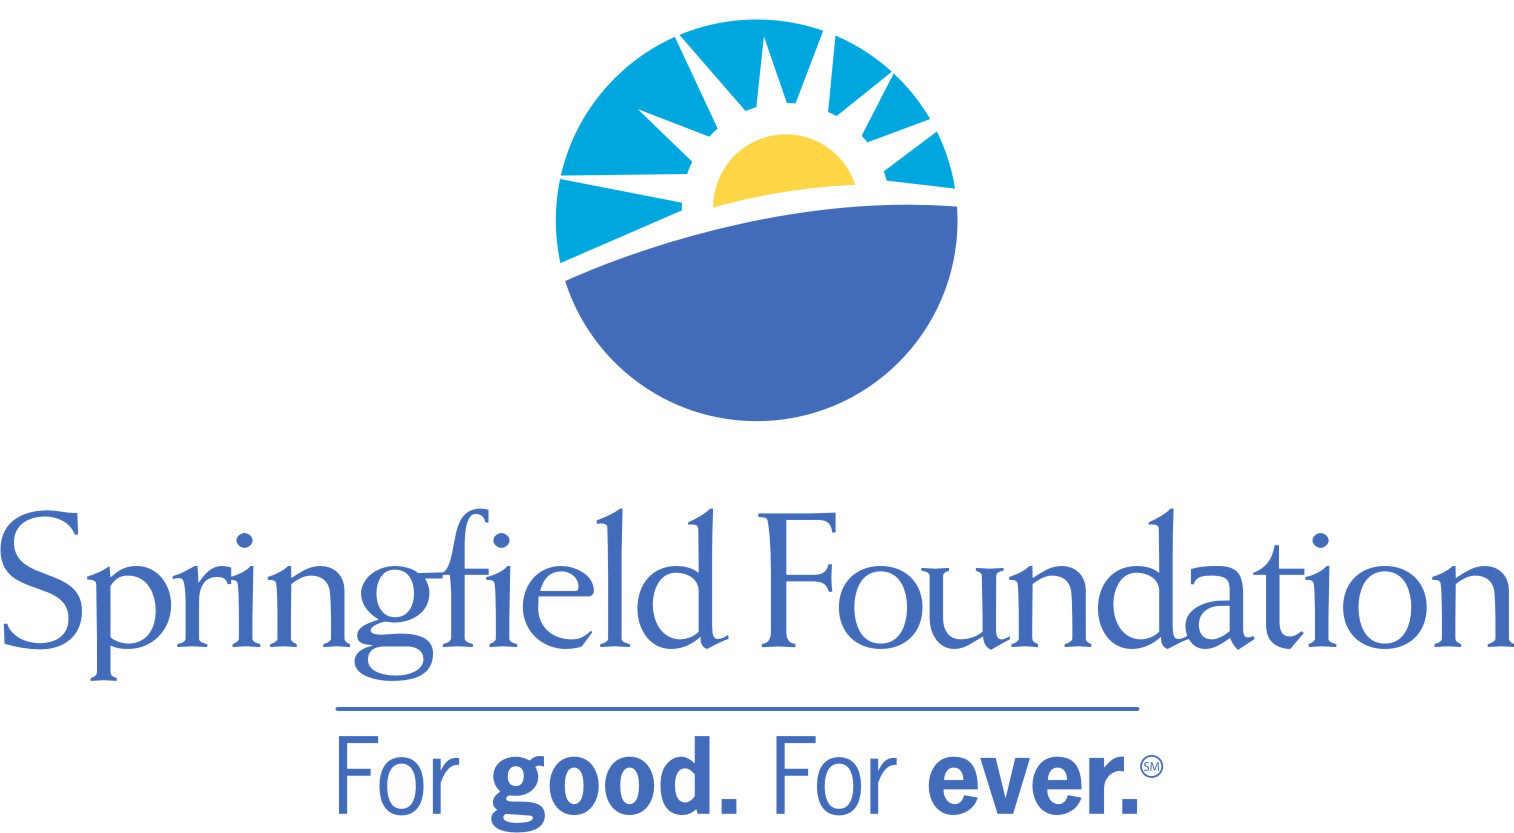  Springfield foundation logo